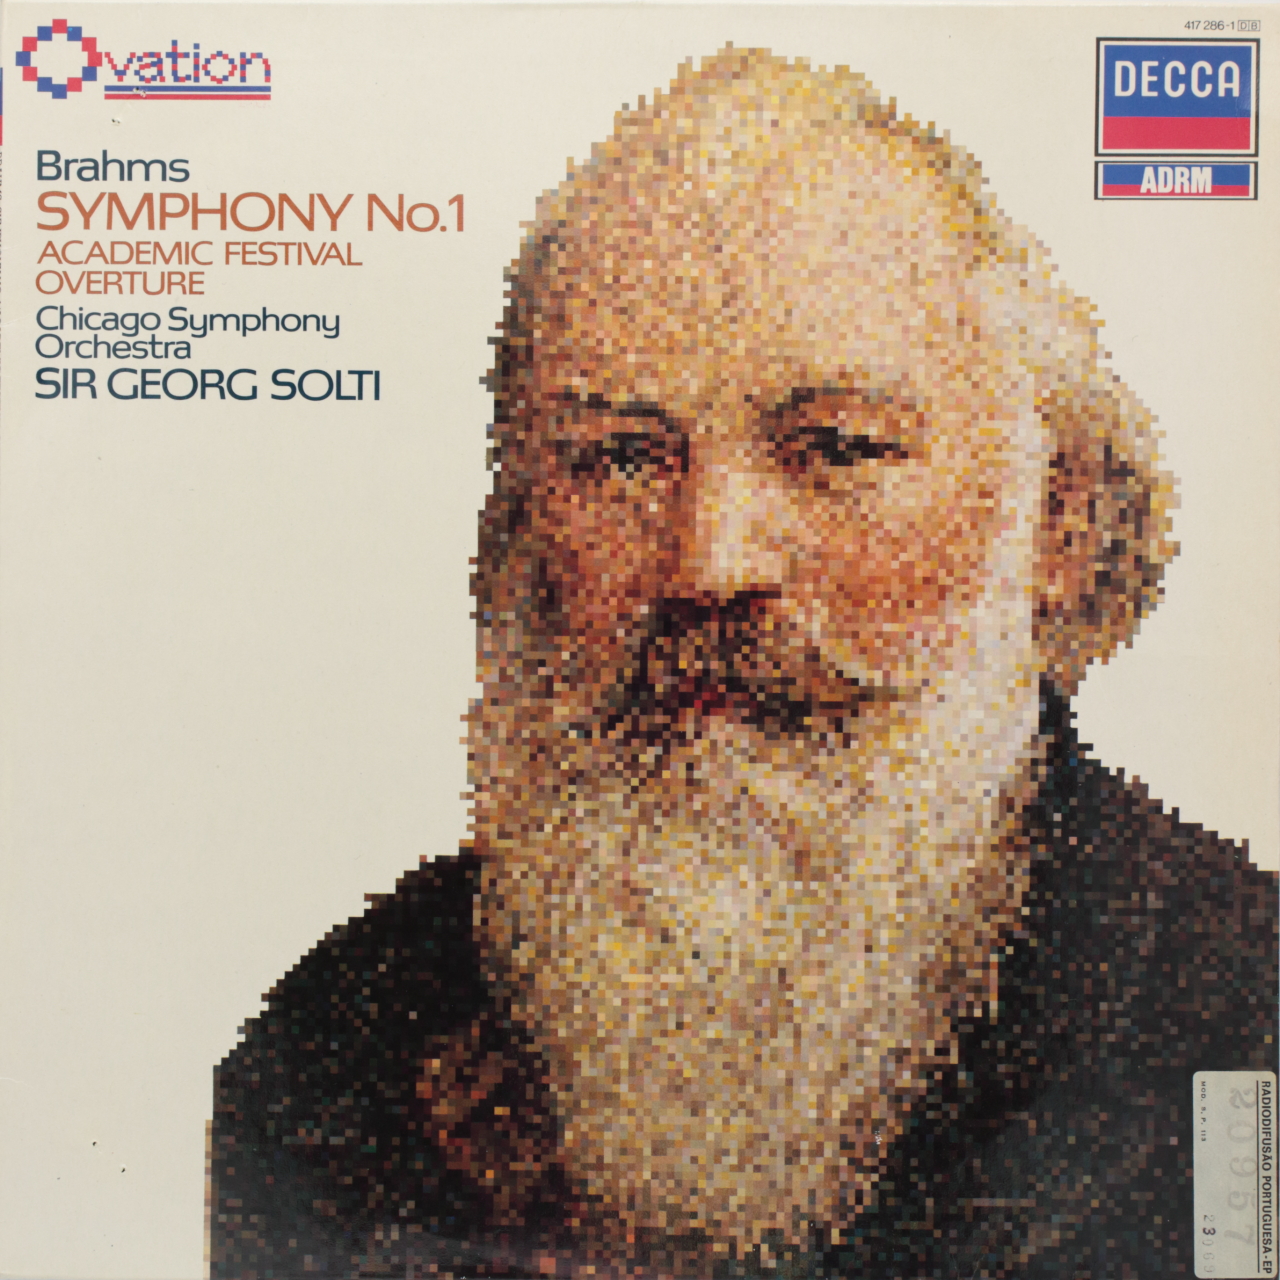 Brahms: Symphony No. 1 in C minor, Op. 68; Academic Festival Overture Op. 80